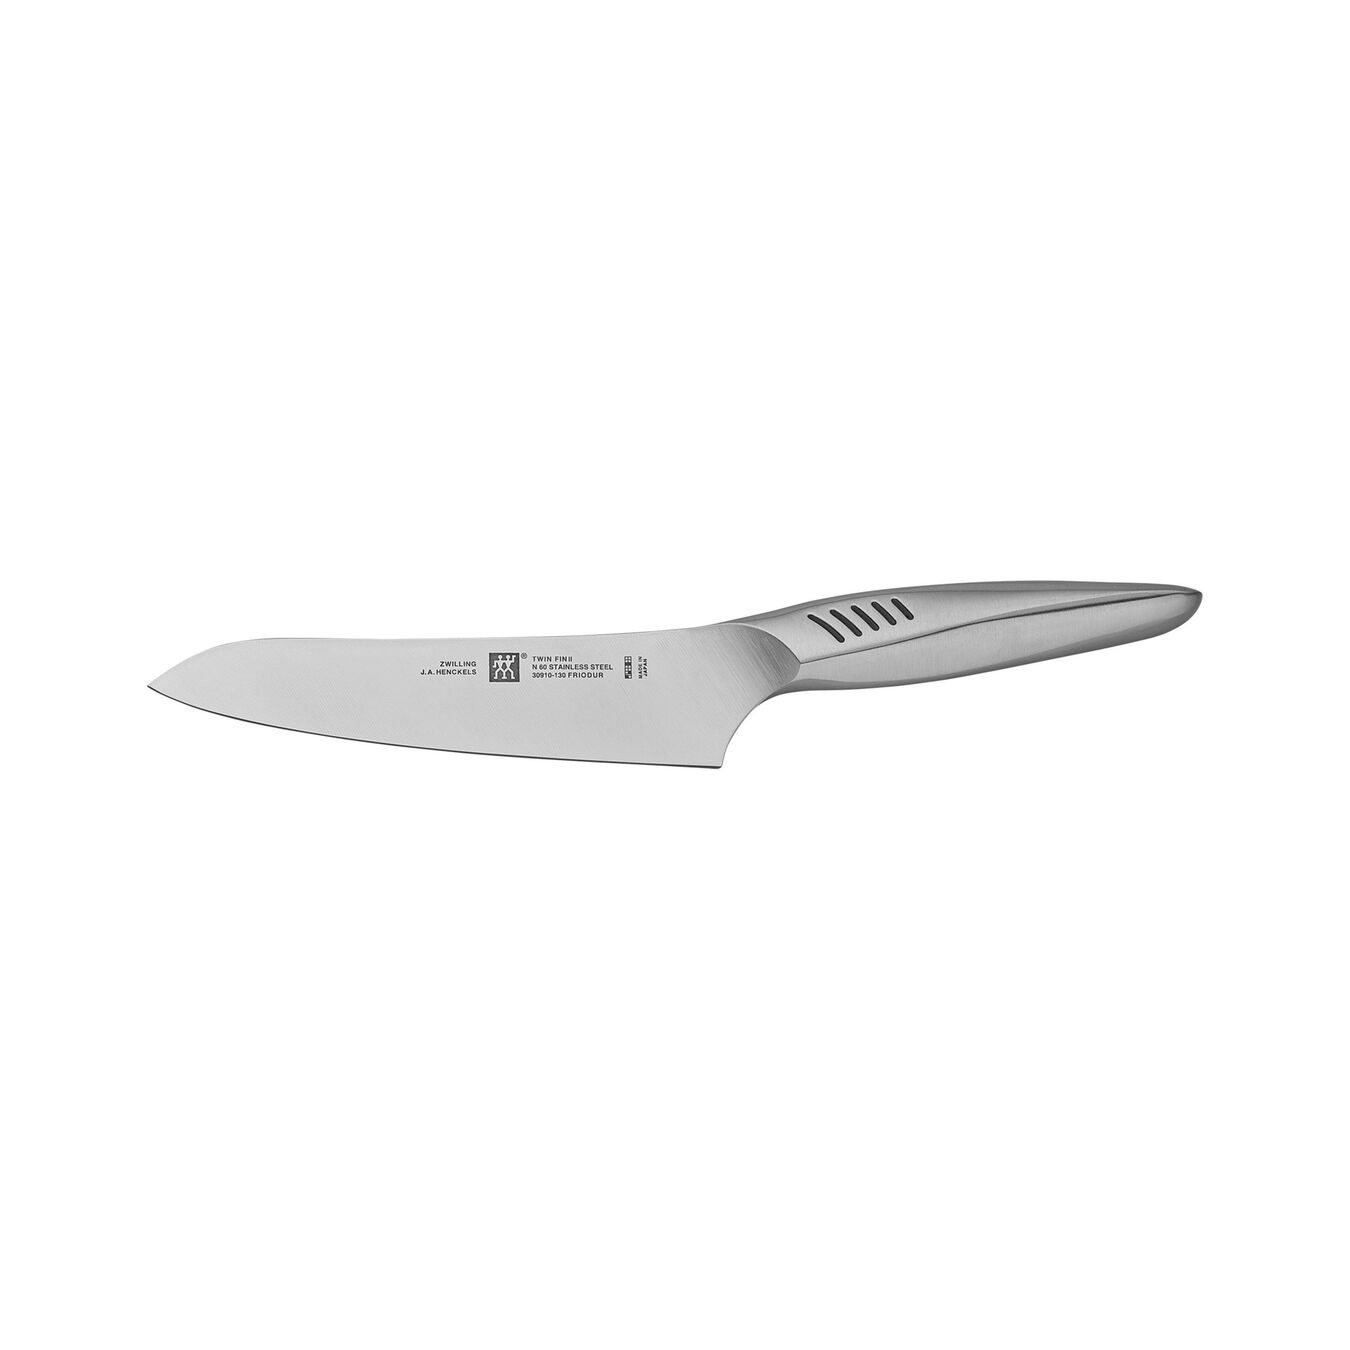 5-inch Prep Knife,,large 1